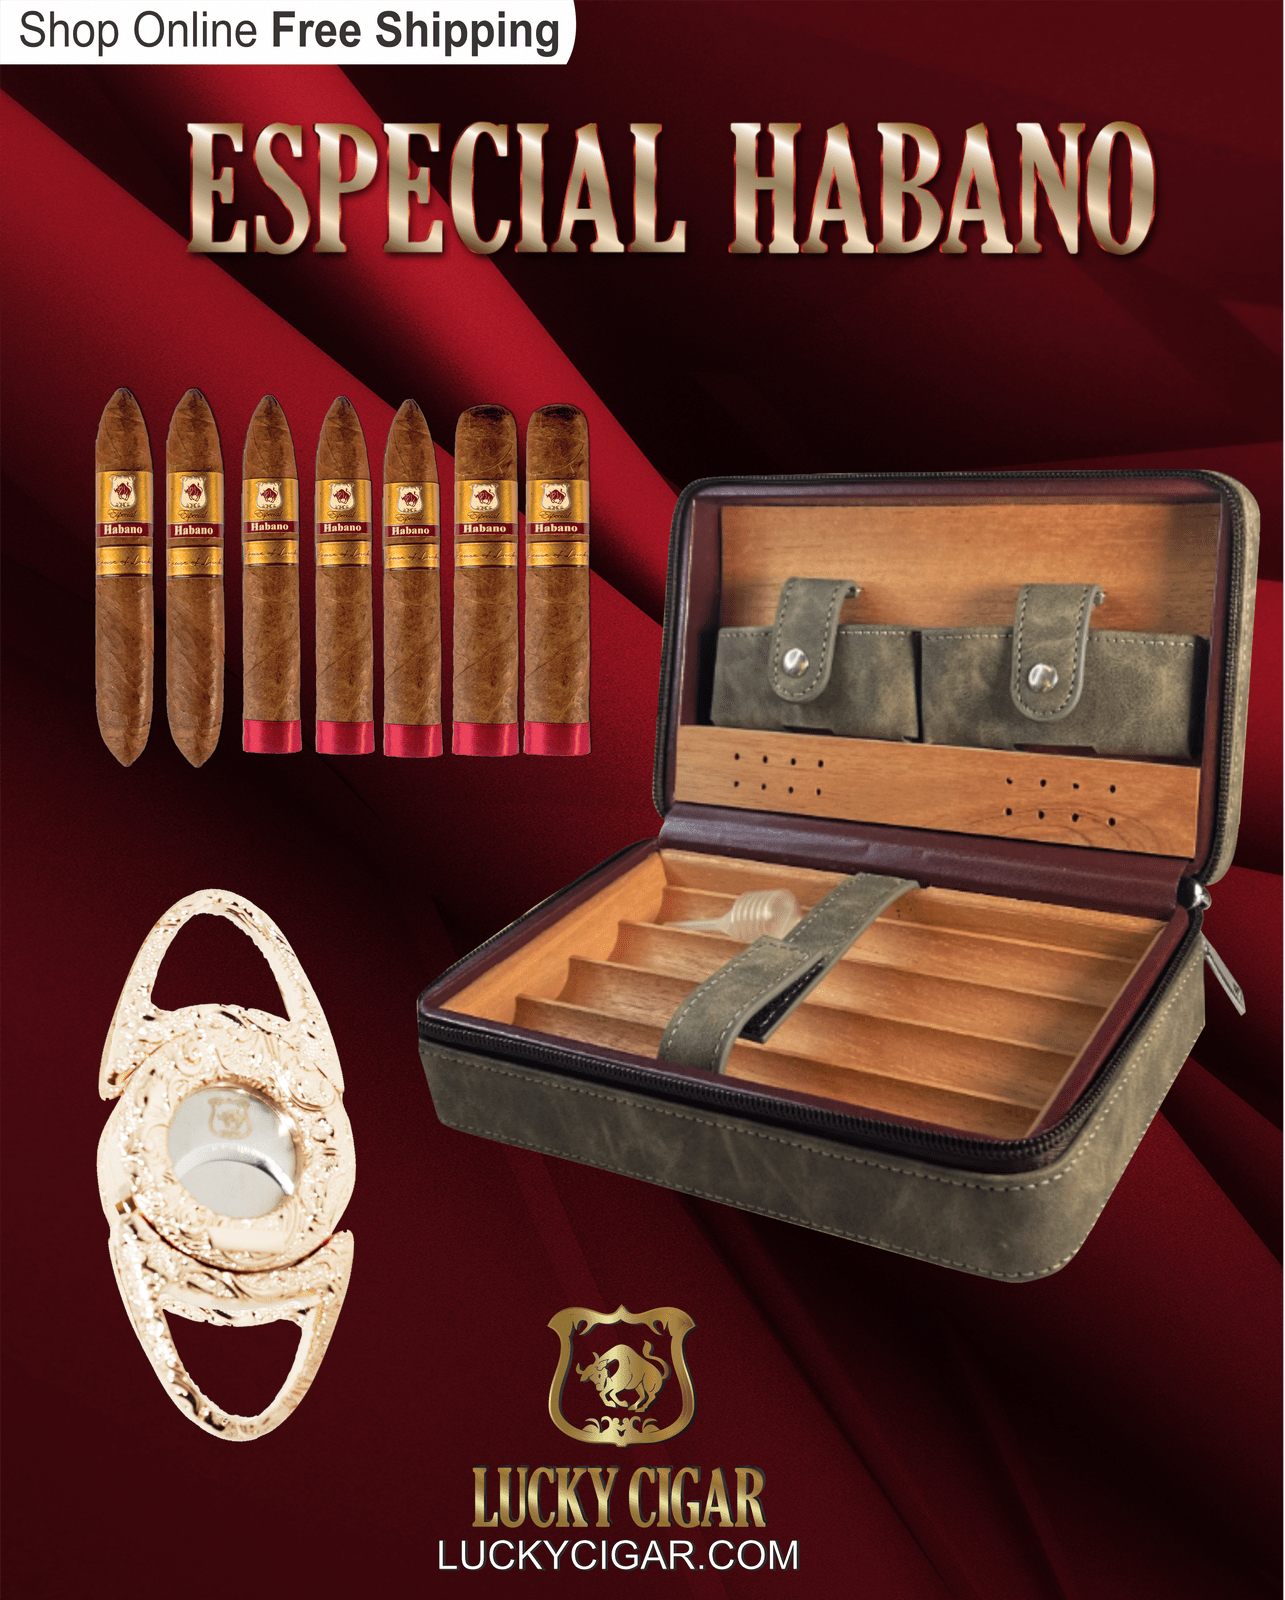 Habano Cigars: Especial Habano by Lucky Cigar: Set of 6 Cigars 2 Toro, 3 Torpedo, 2 Perfecto with Humidor, Cutter